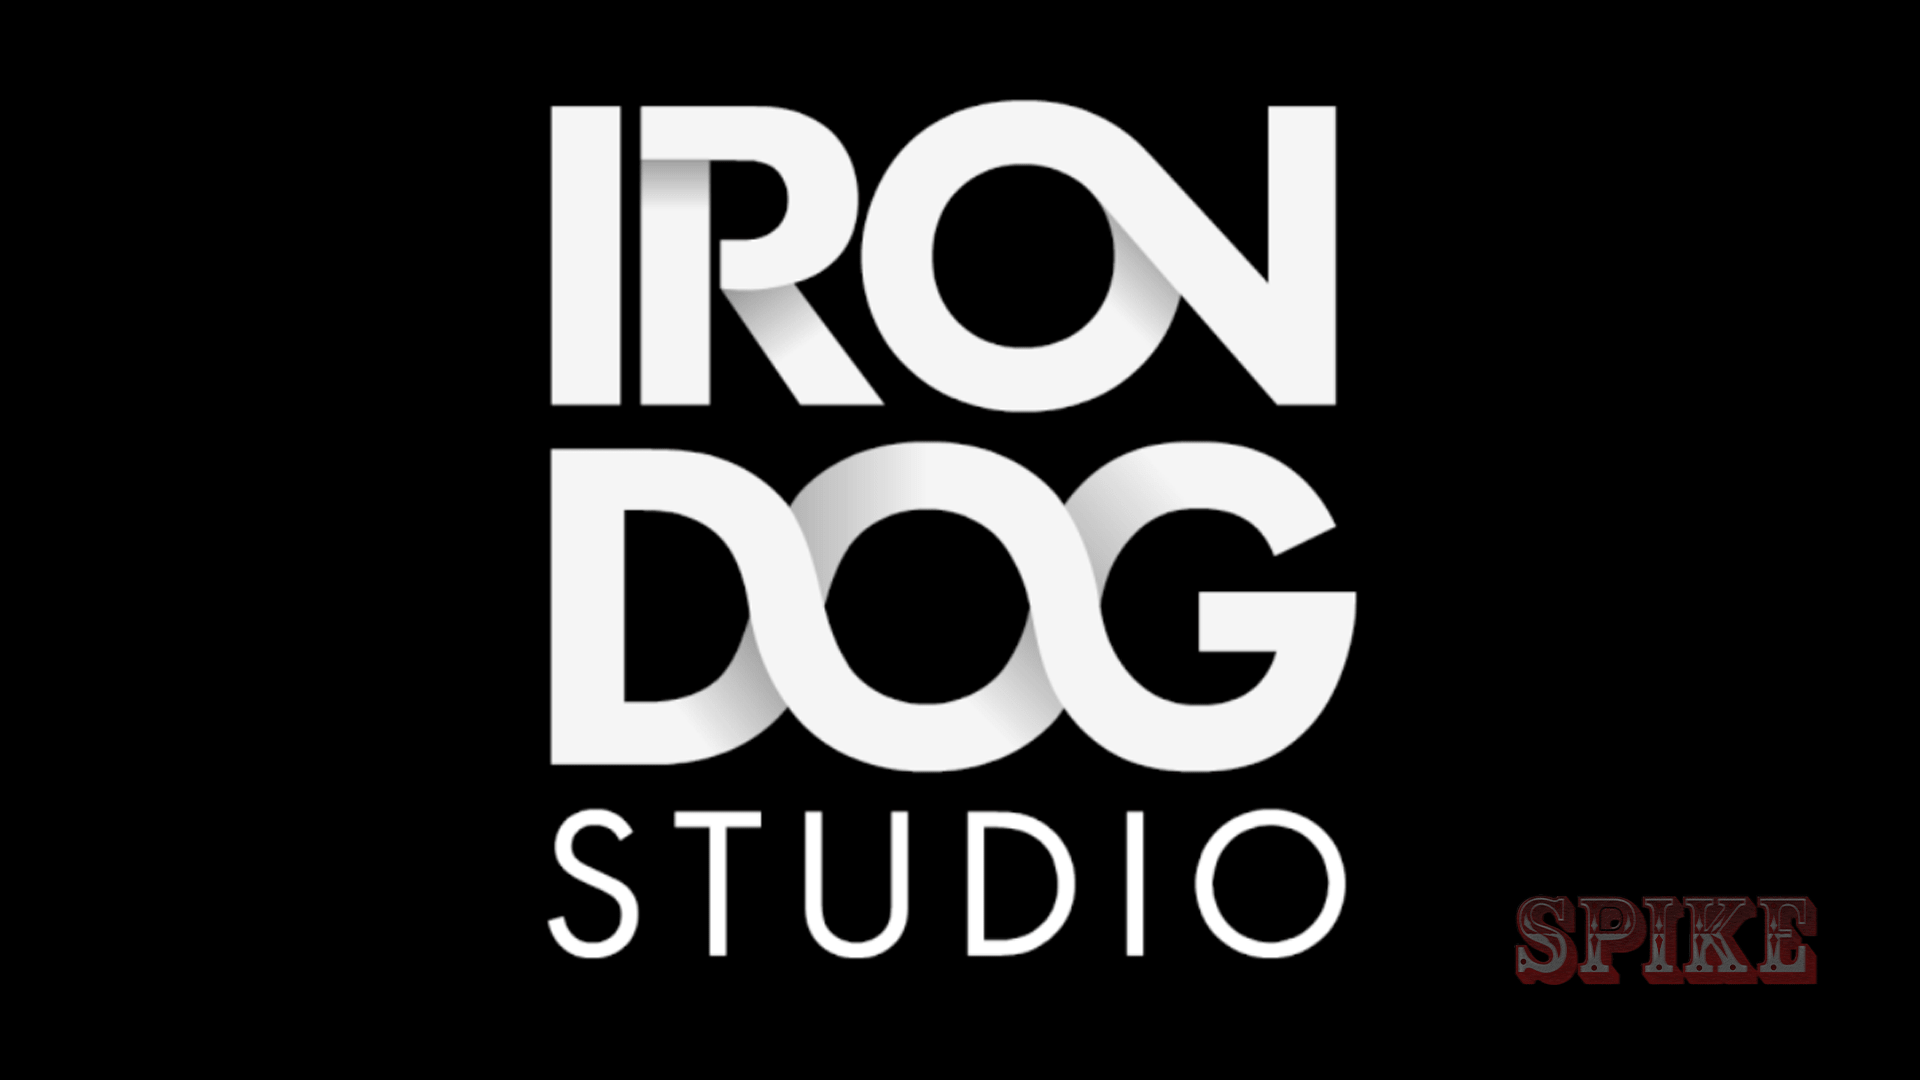 iron dog studio producer logo free demo online